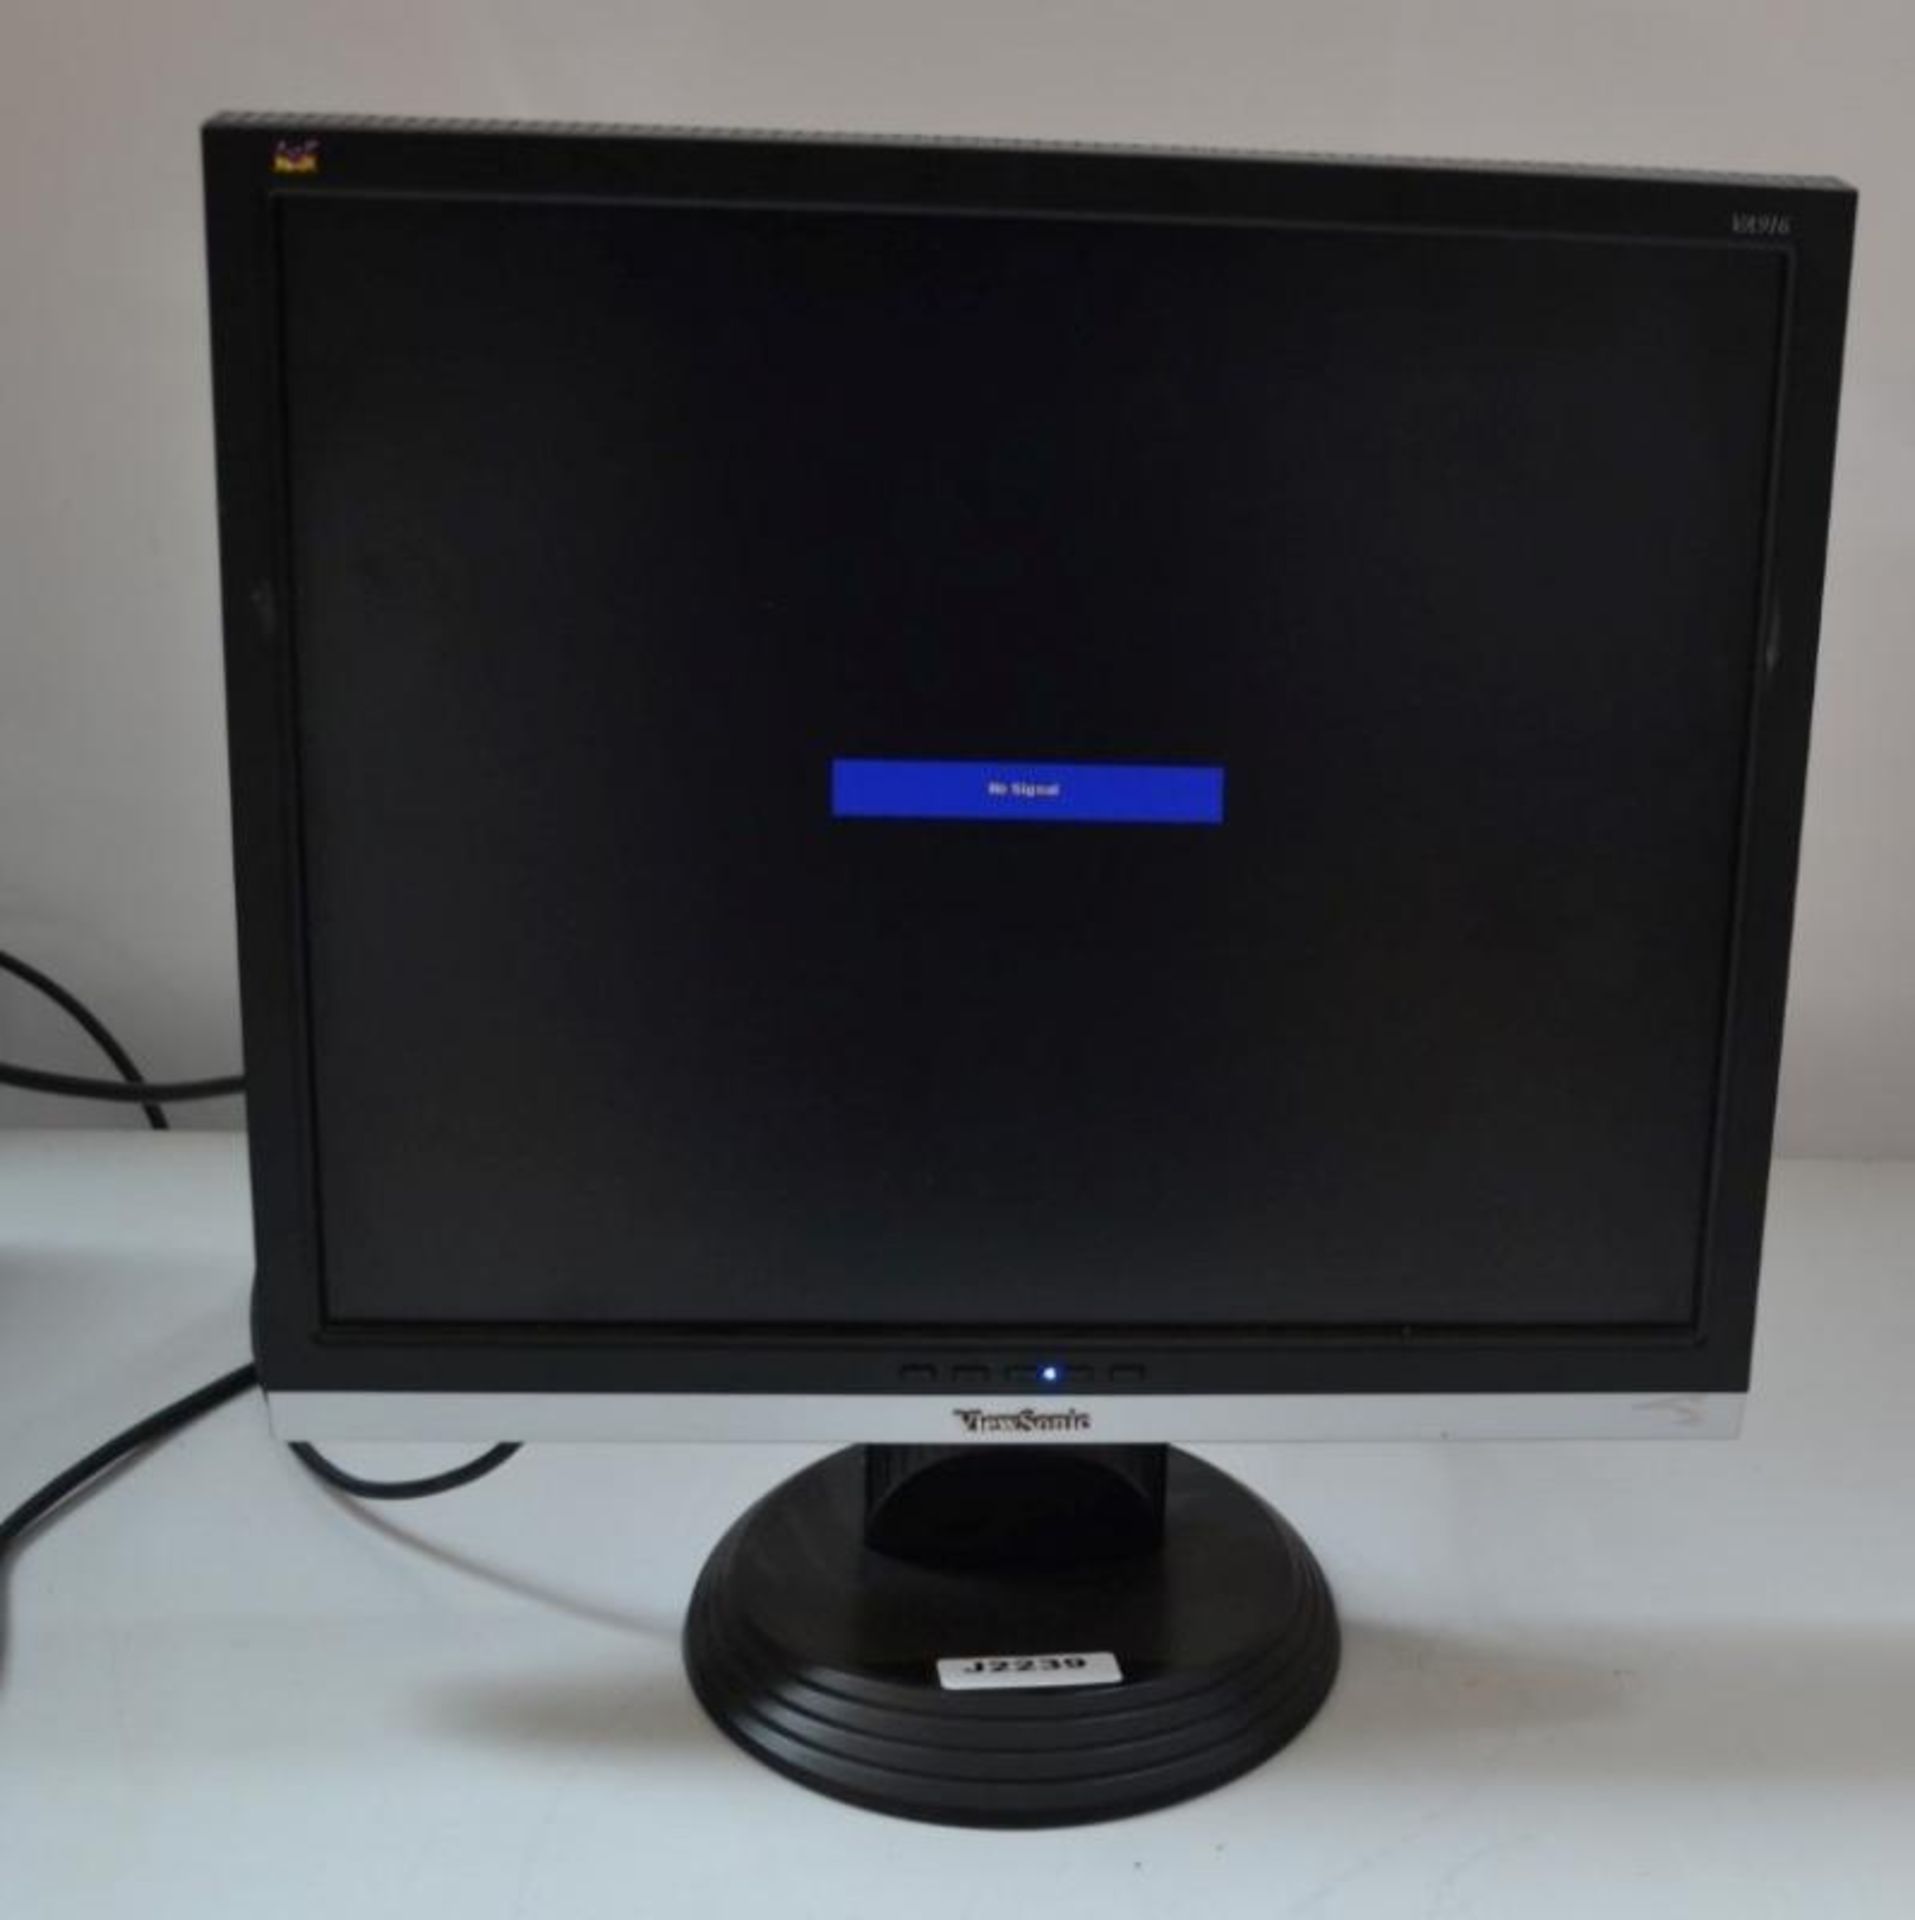 1 x ViewSonic VA916 19" LCD PC Monitor - Ref J2239 - CL394 - Location: Altrincham WA14 - HKPal2